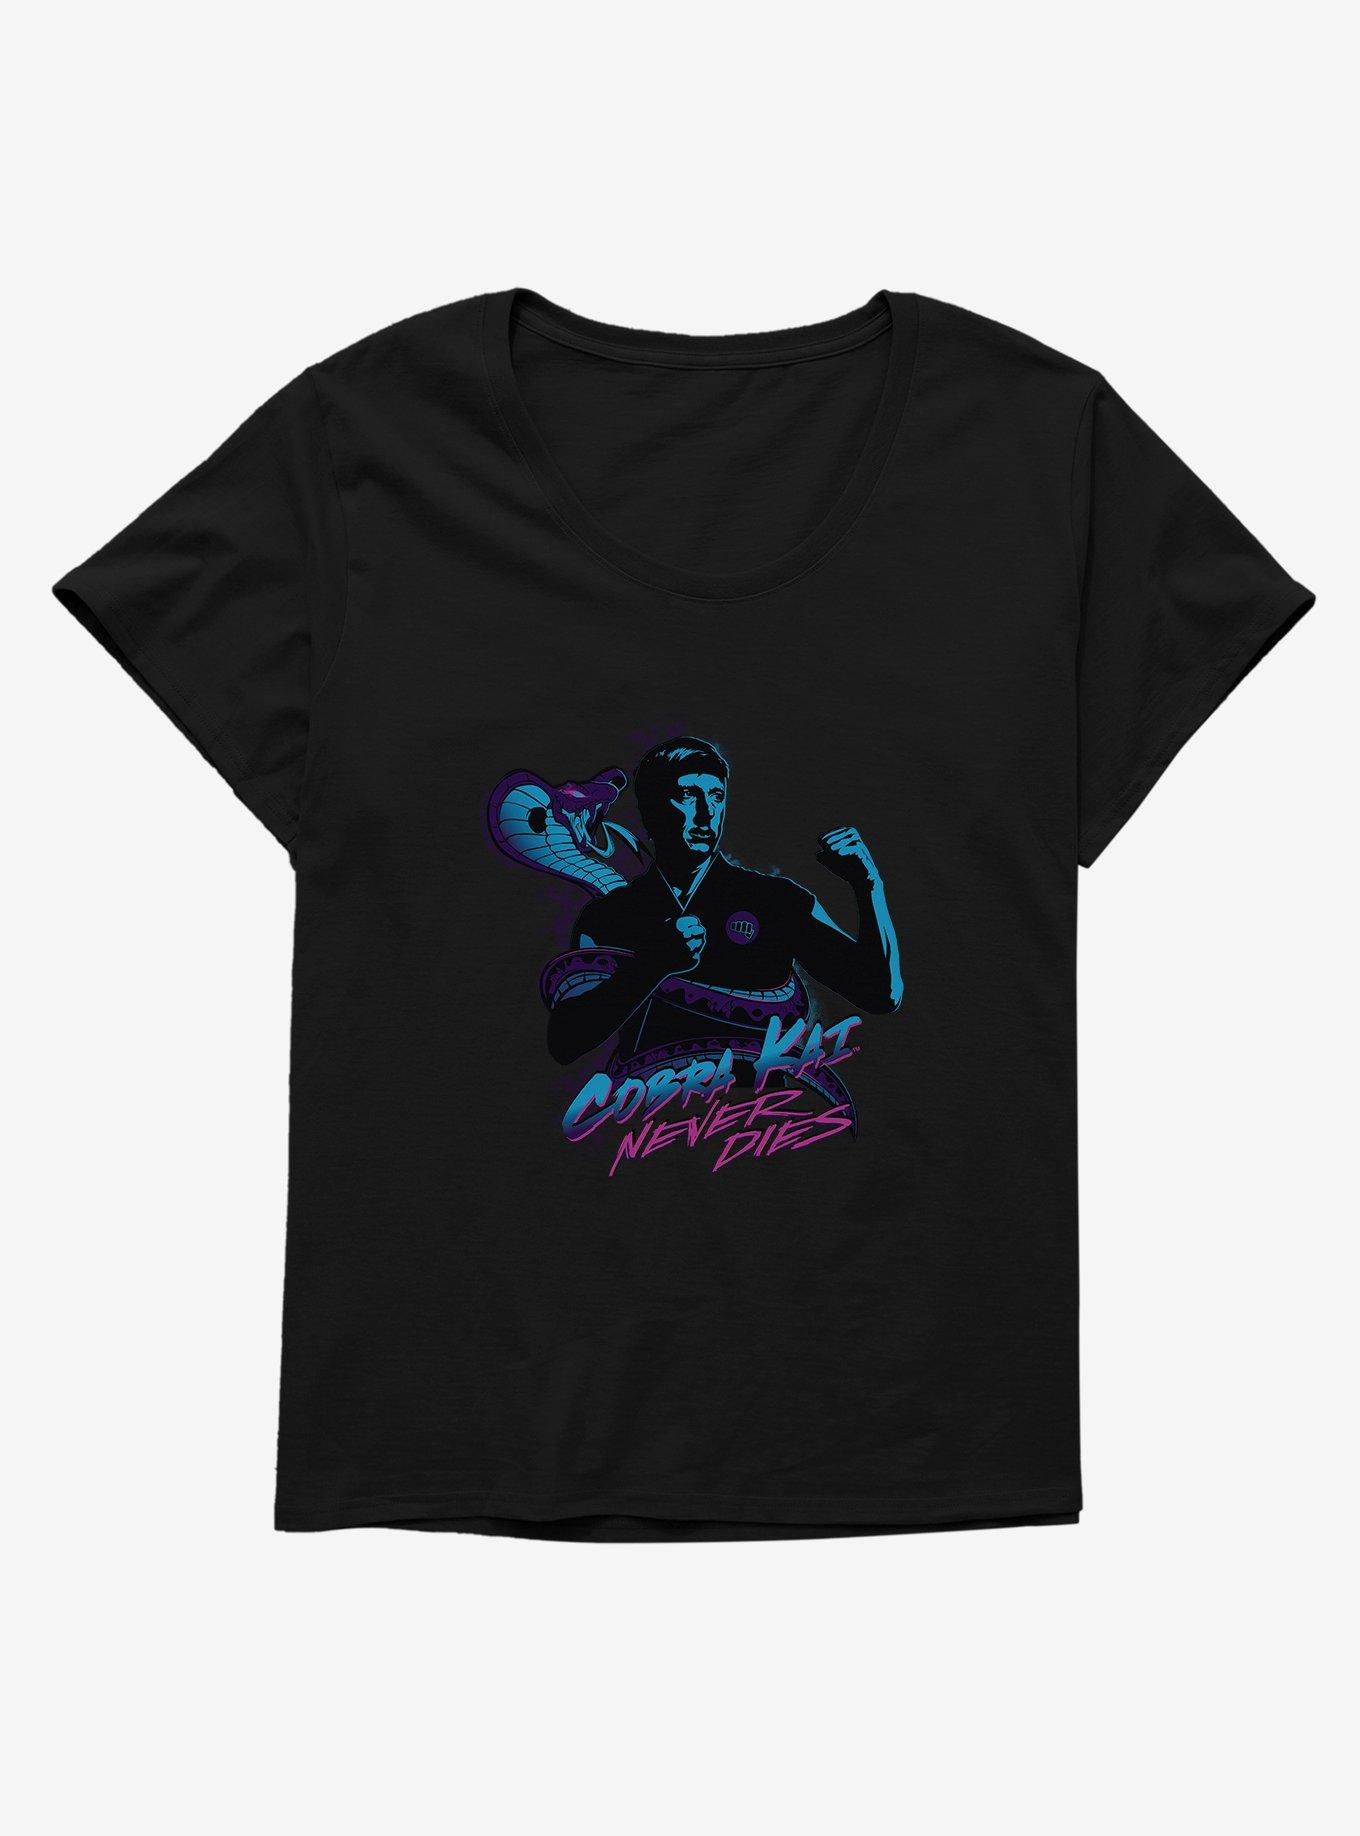 Cobra Kai Never Dies Girls T-Shirt Plus